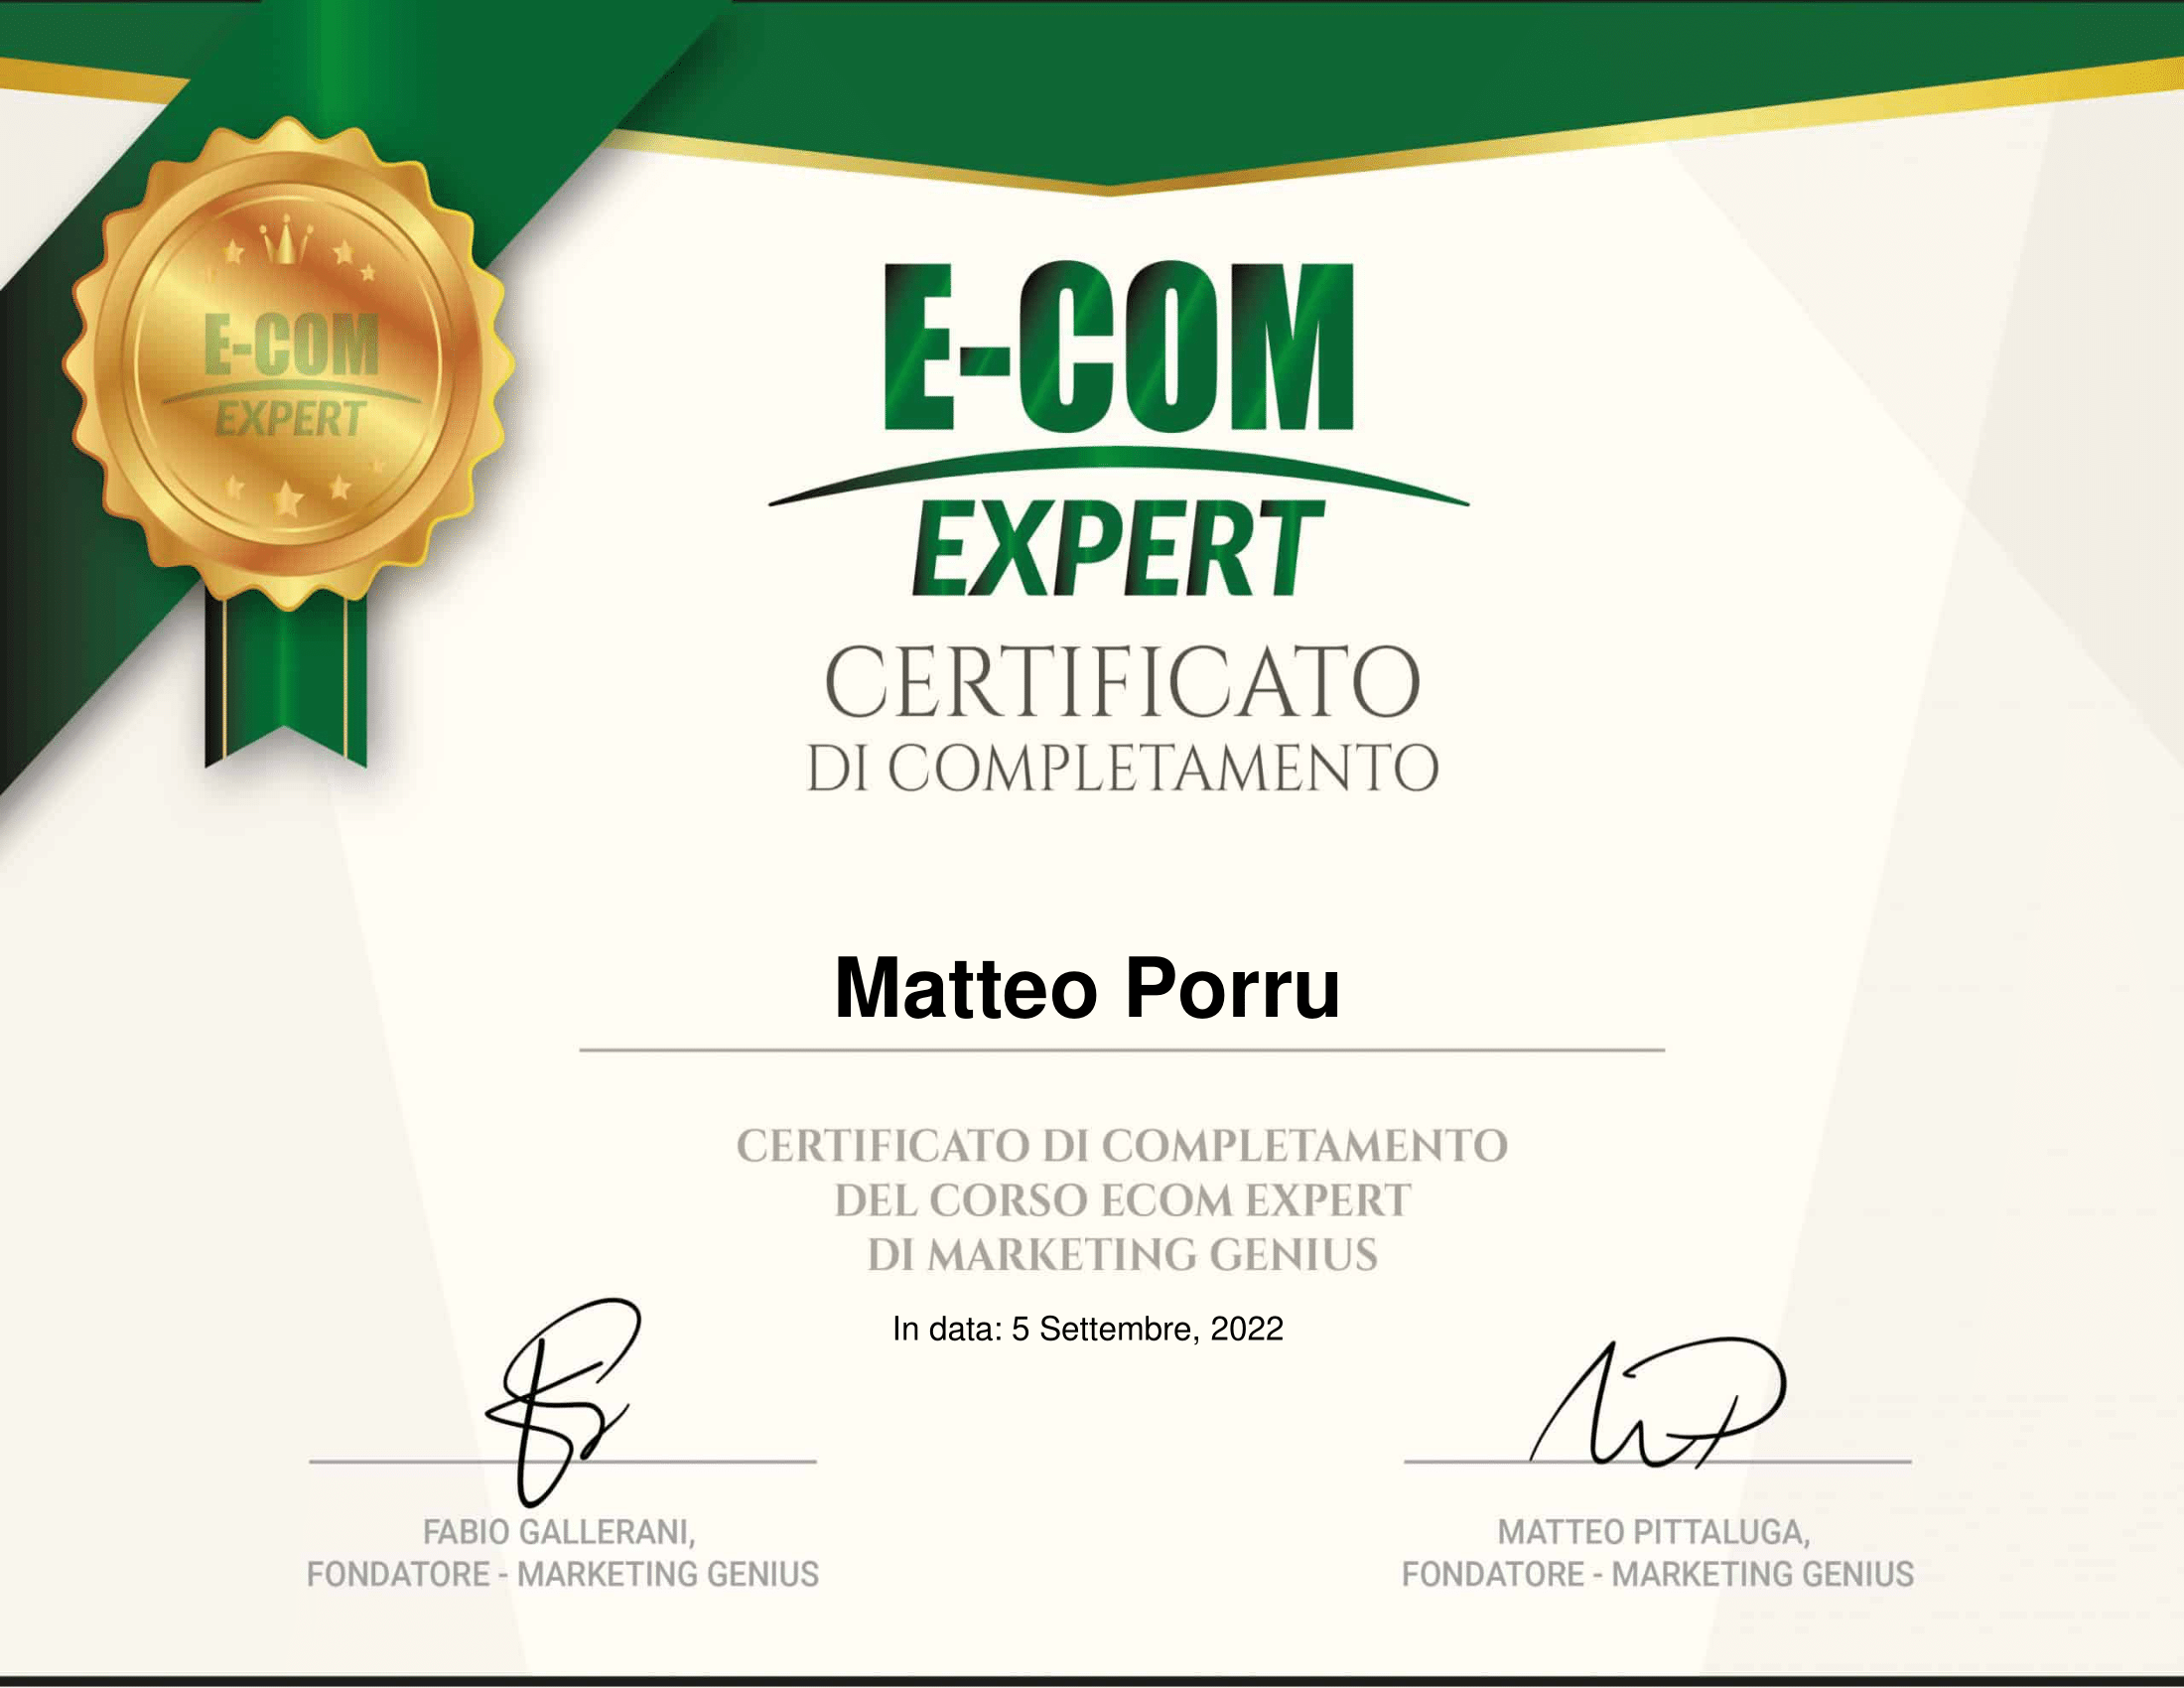 Matteo-Porru-ECOM-EXPERT-Certificato-Ecom-Expert-MG-Digital-School-1